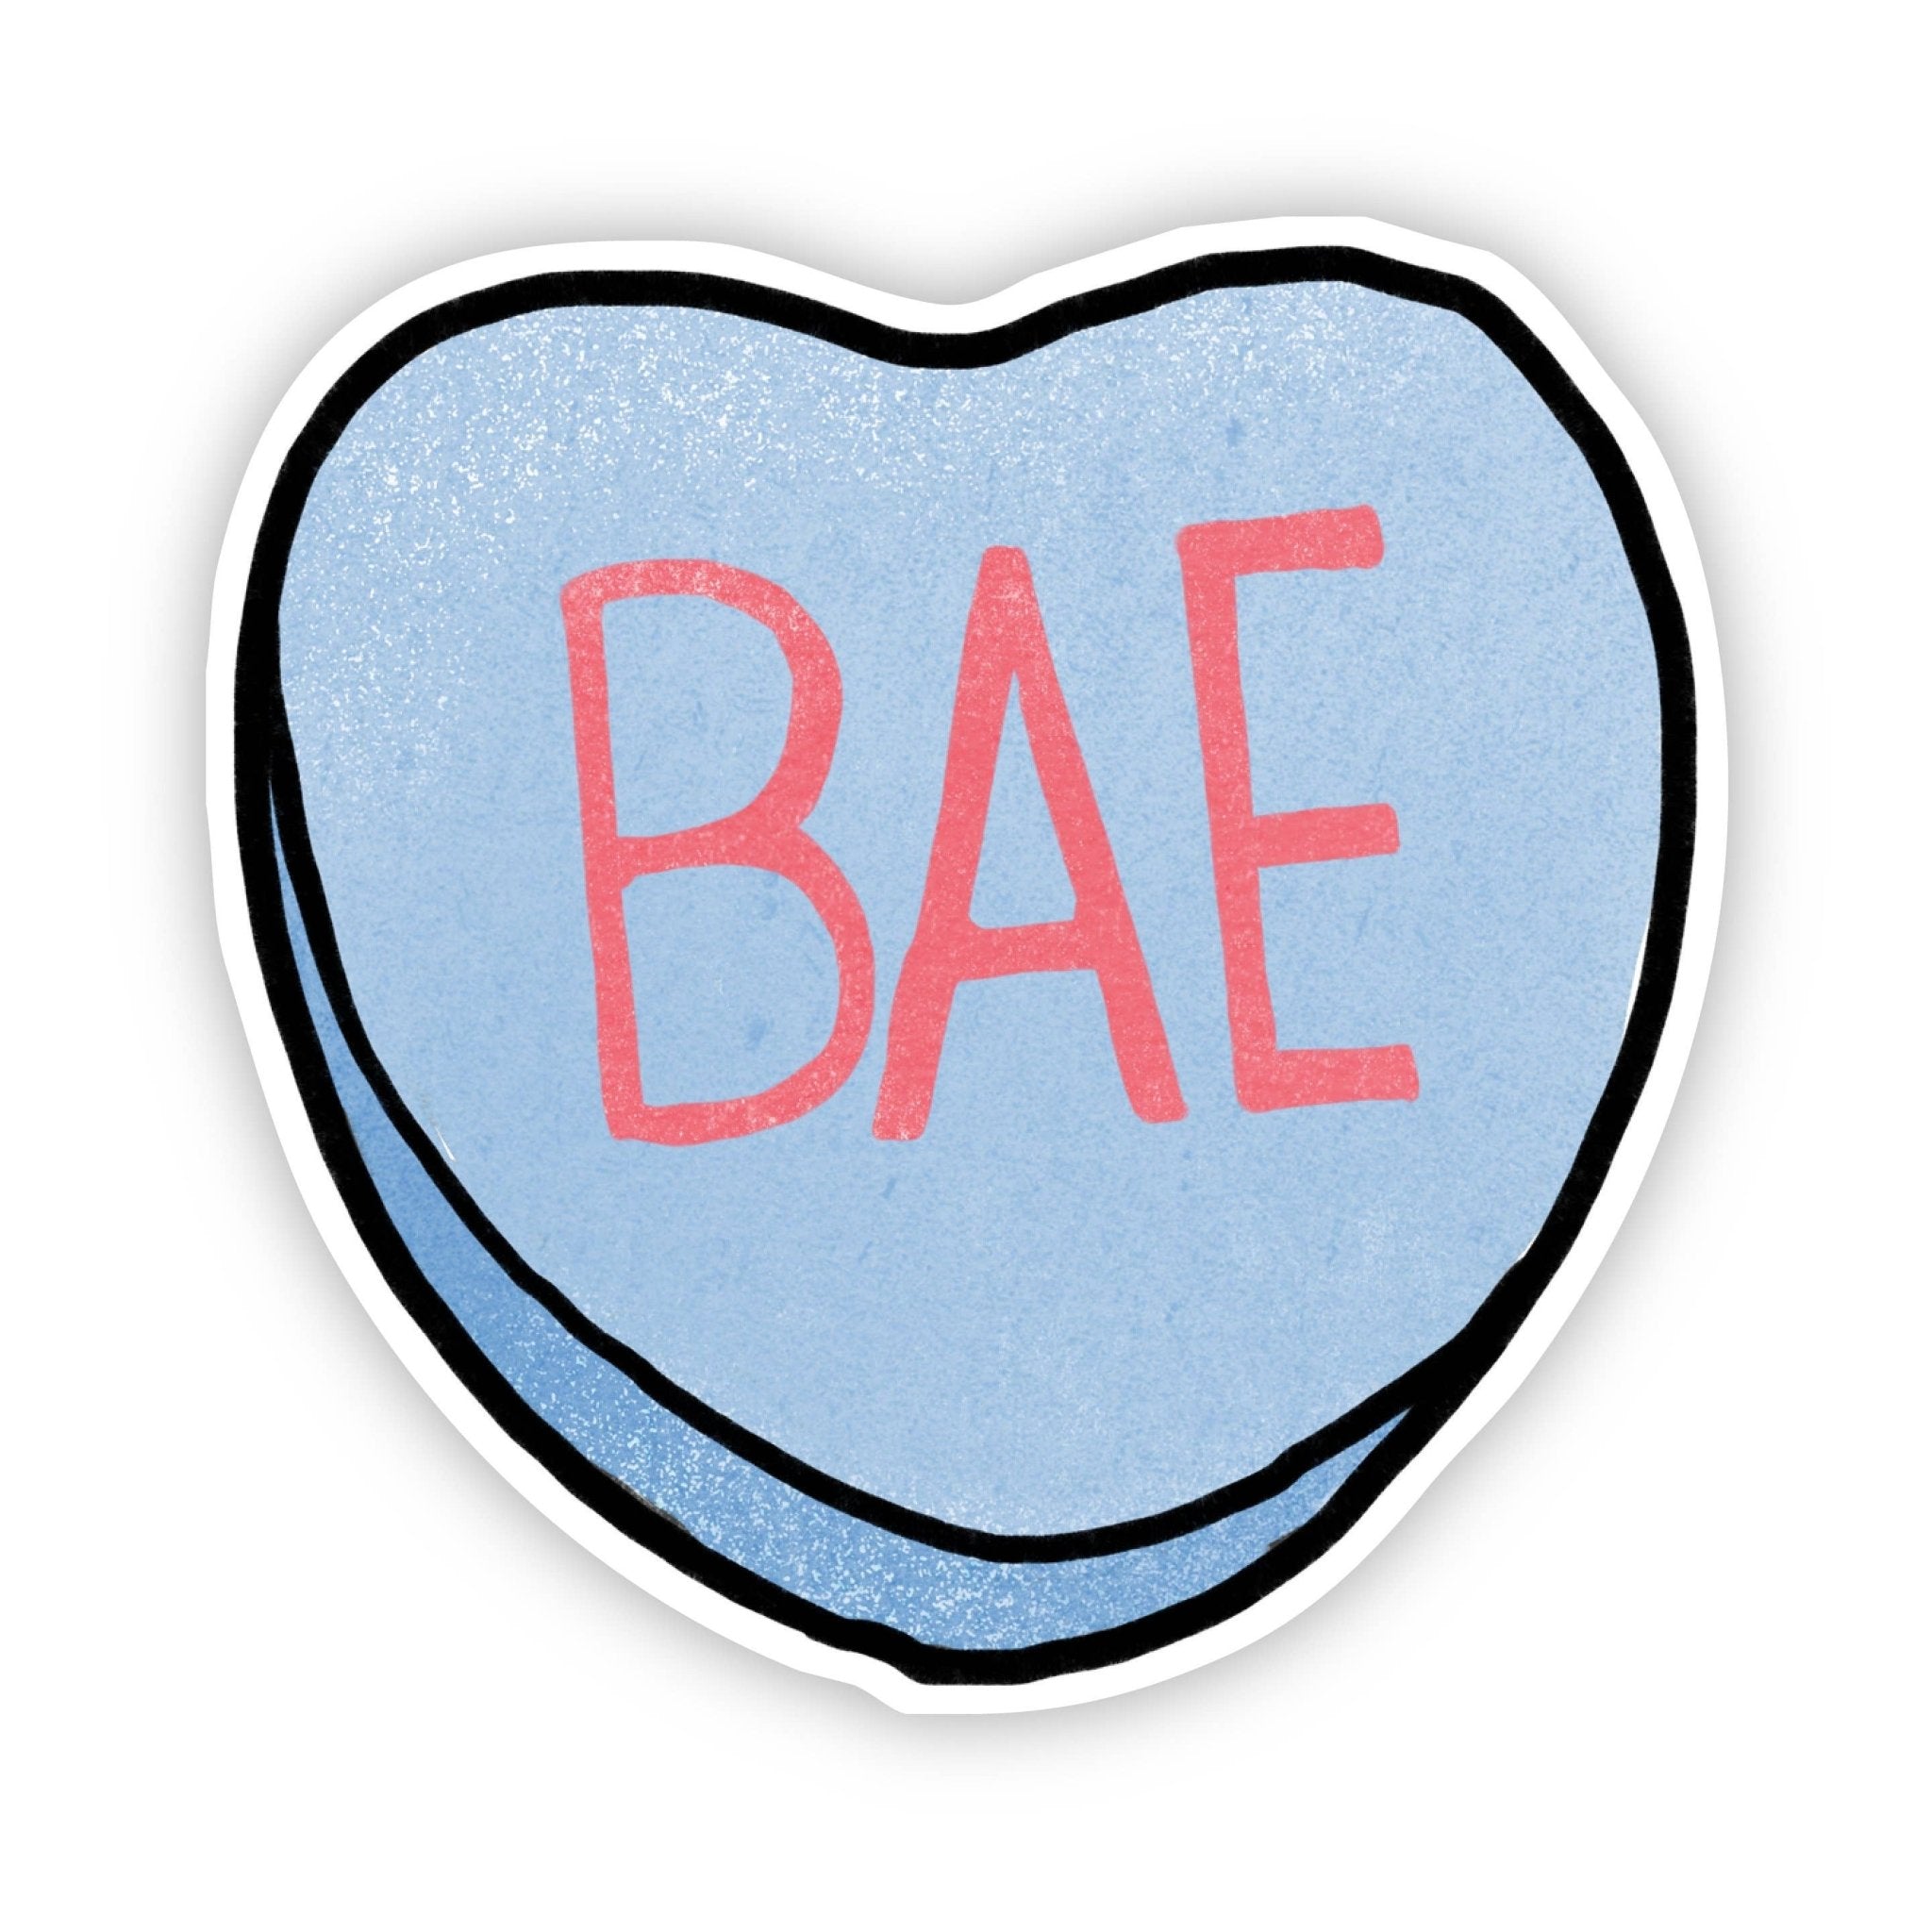 Bae Heart Sticker - Spiral Circle